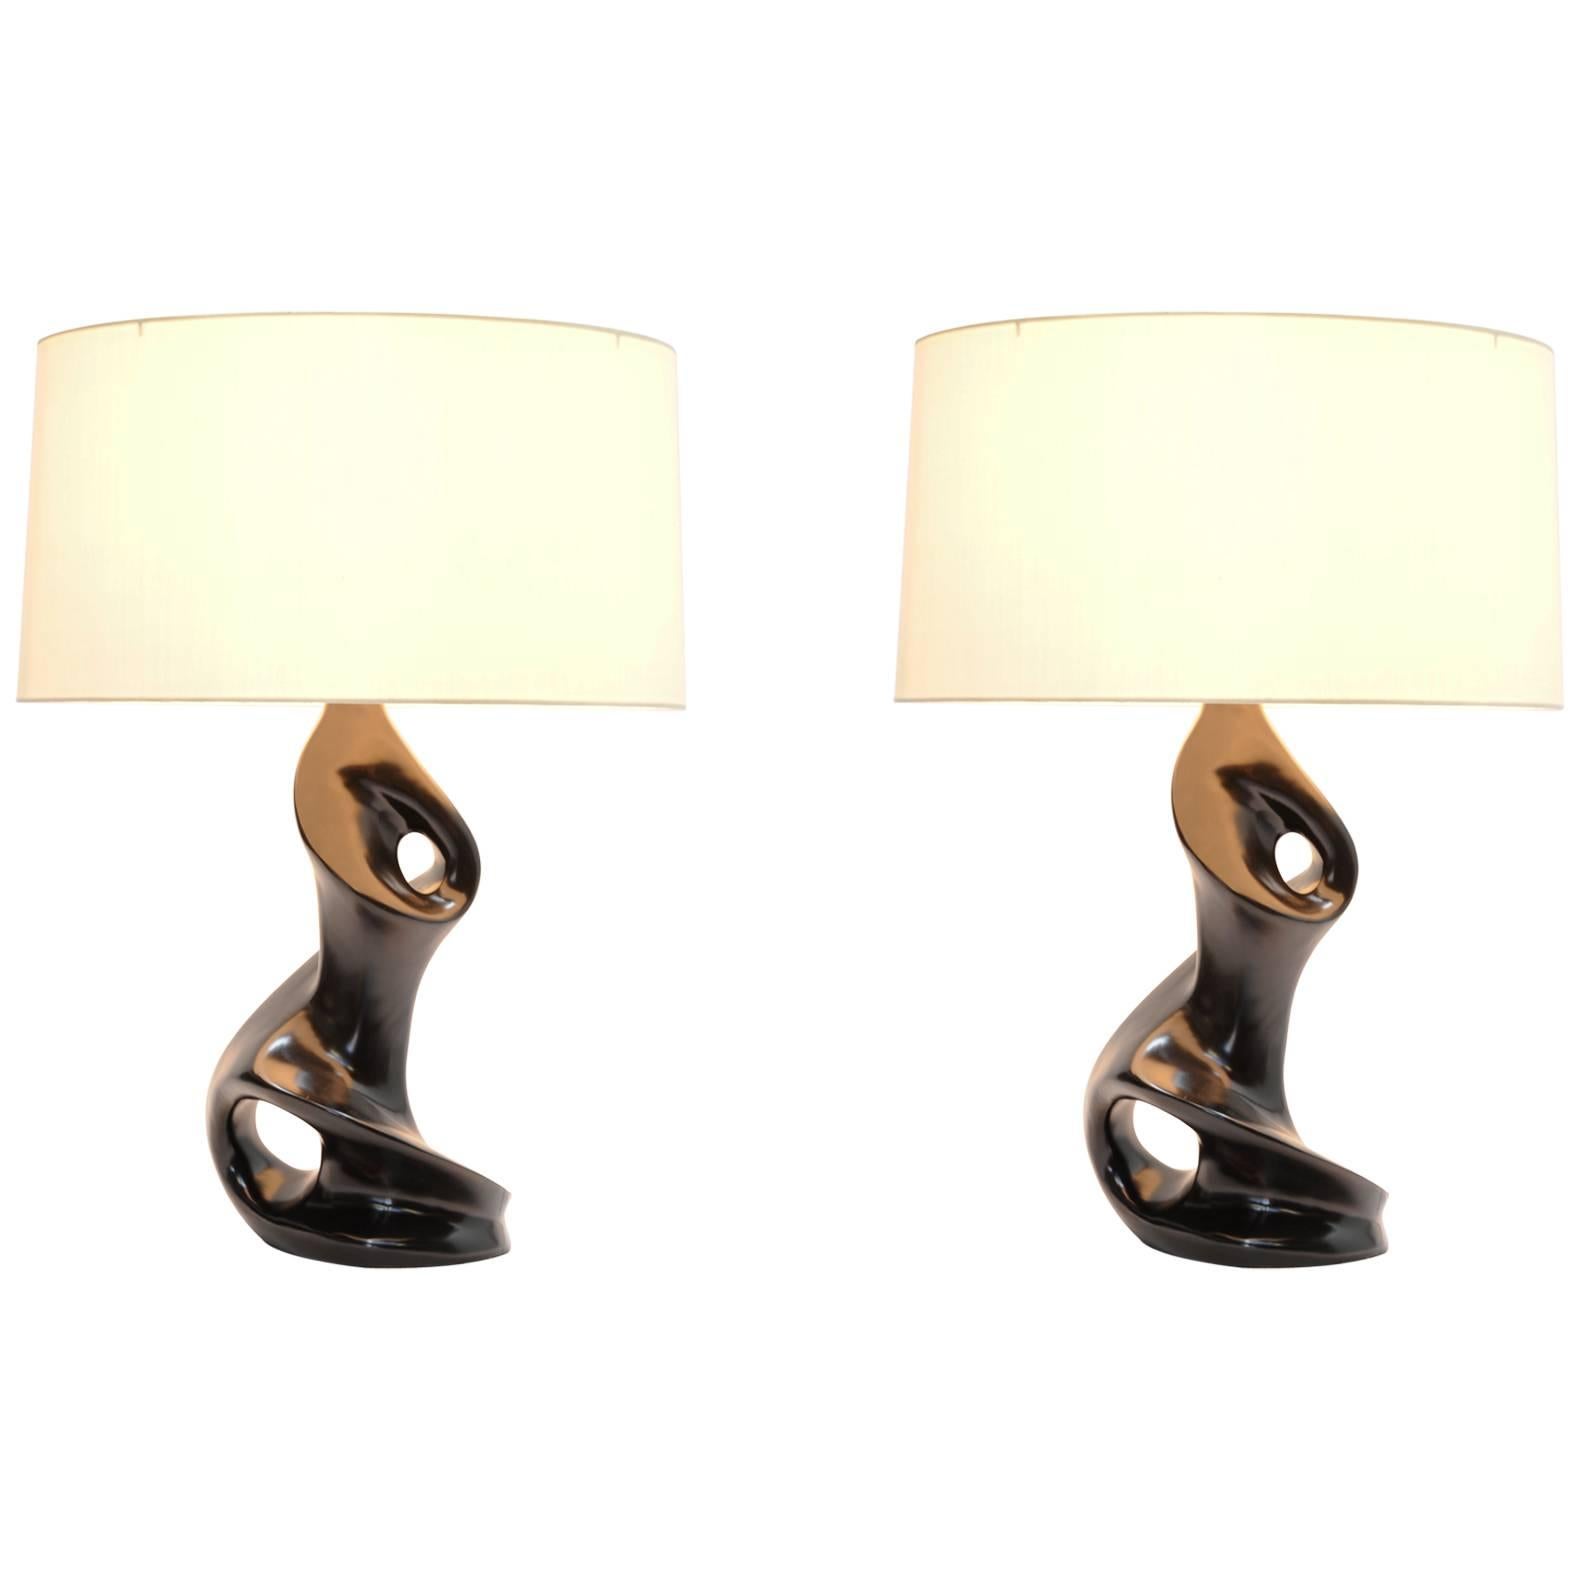 Pair of Sensual Lamps in the Manner of Paul Laszlo